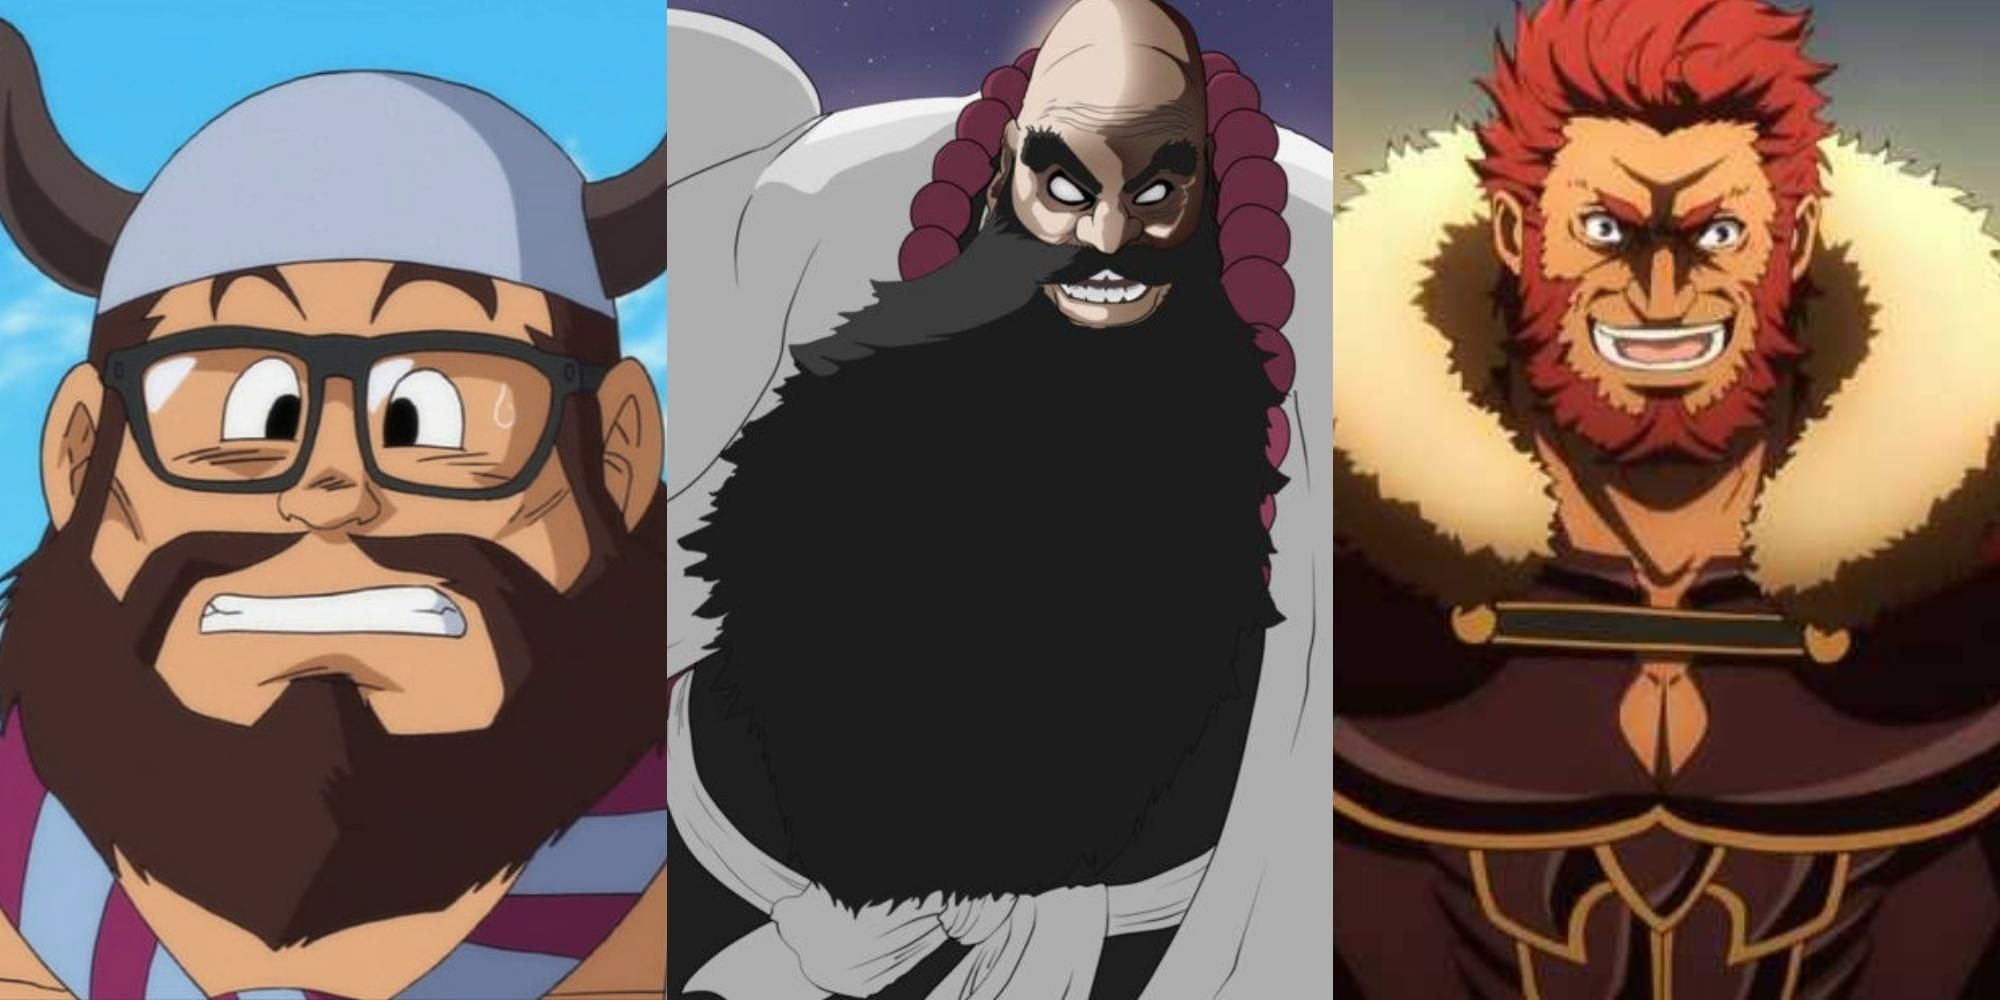 Why doesnt Naruto or Sasuke have beardI would have liked if Sasuke had a  beard like Naruto In the picture  rBoruto